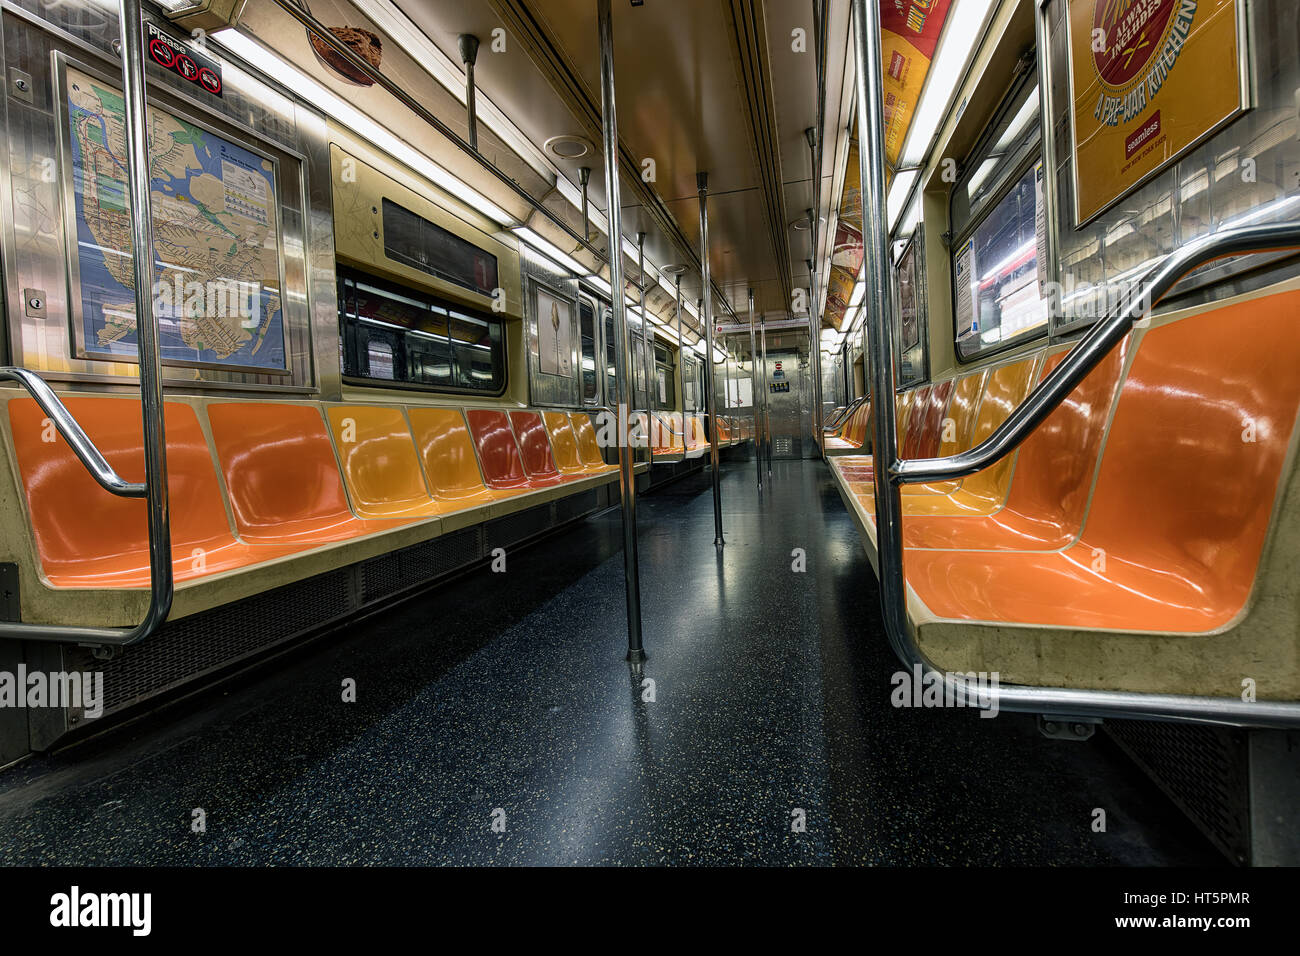 New York City Subway car interior with no passengers Stock Photo